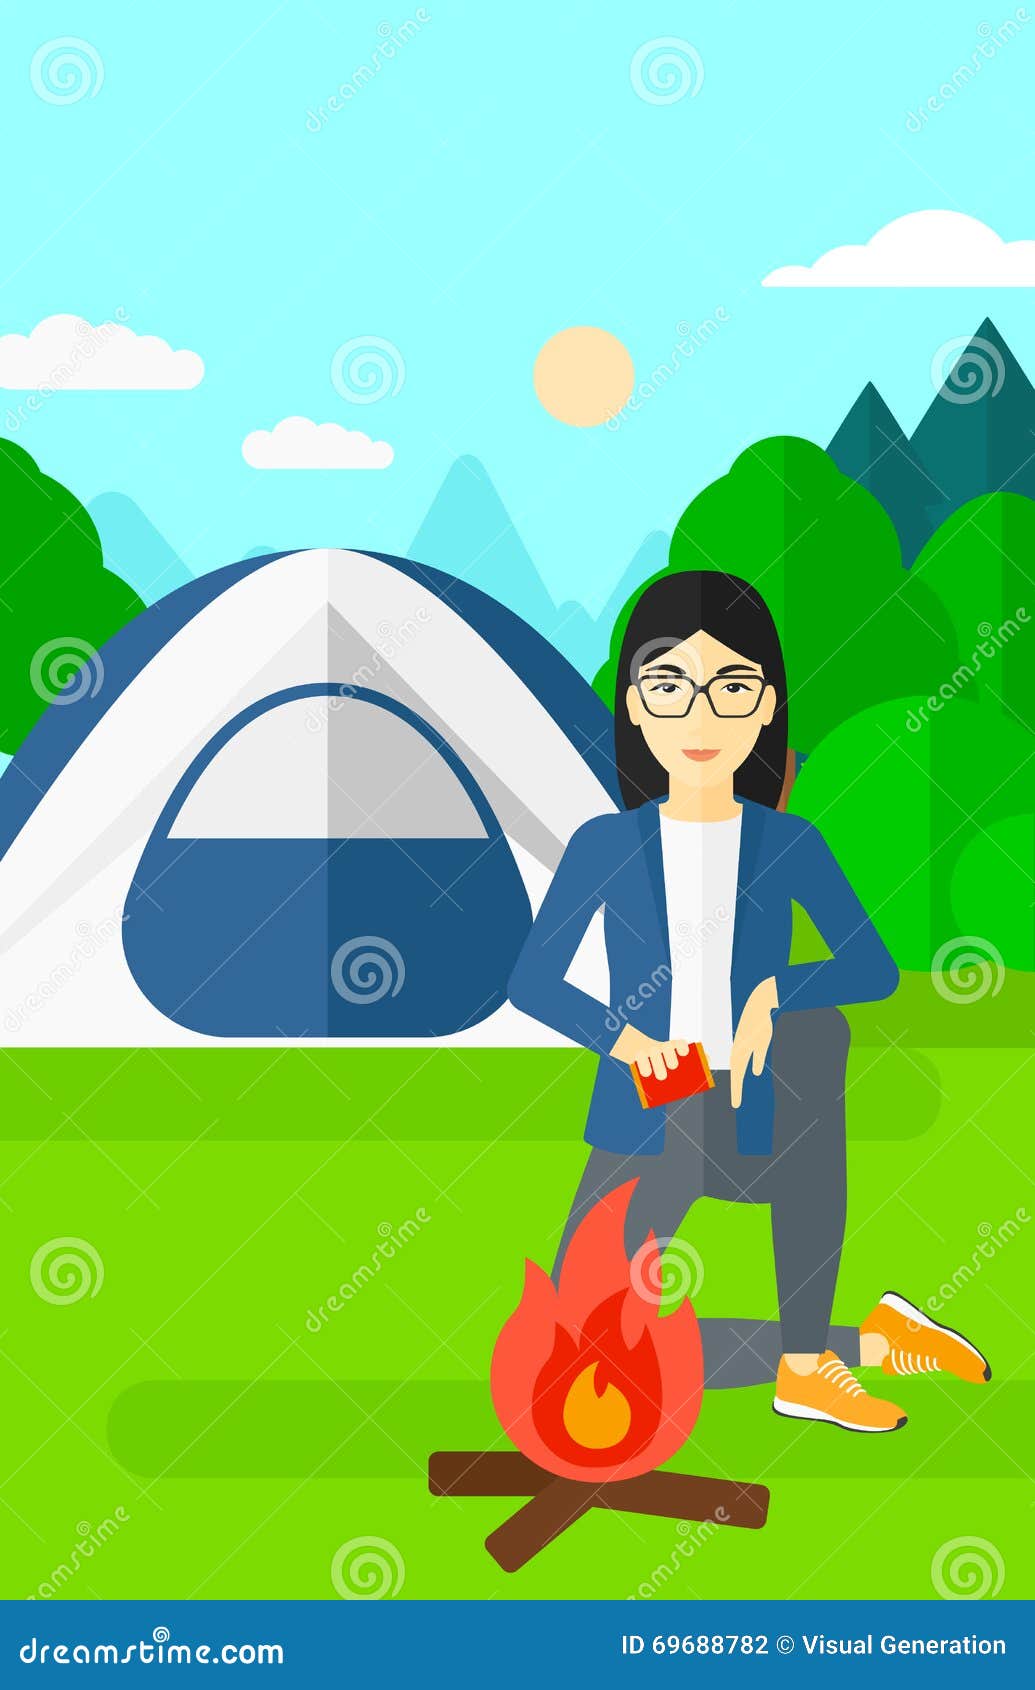 Woman kindling fire. stock vector. Illustration of design - 69688782